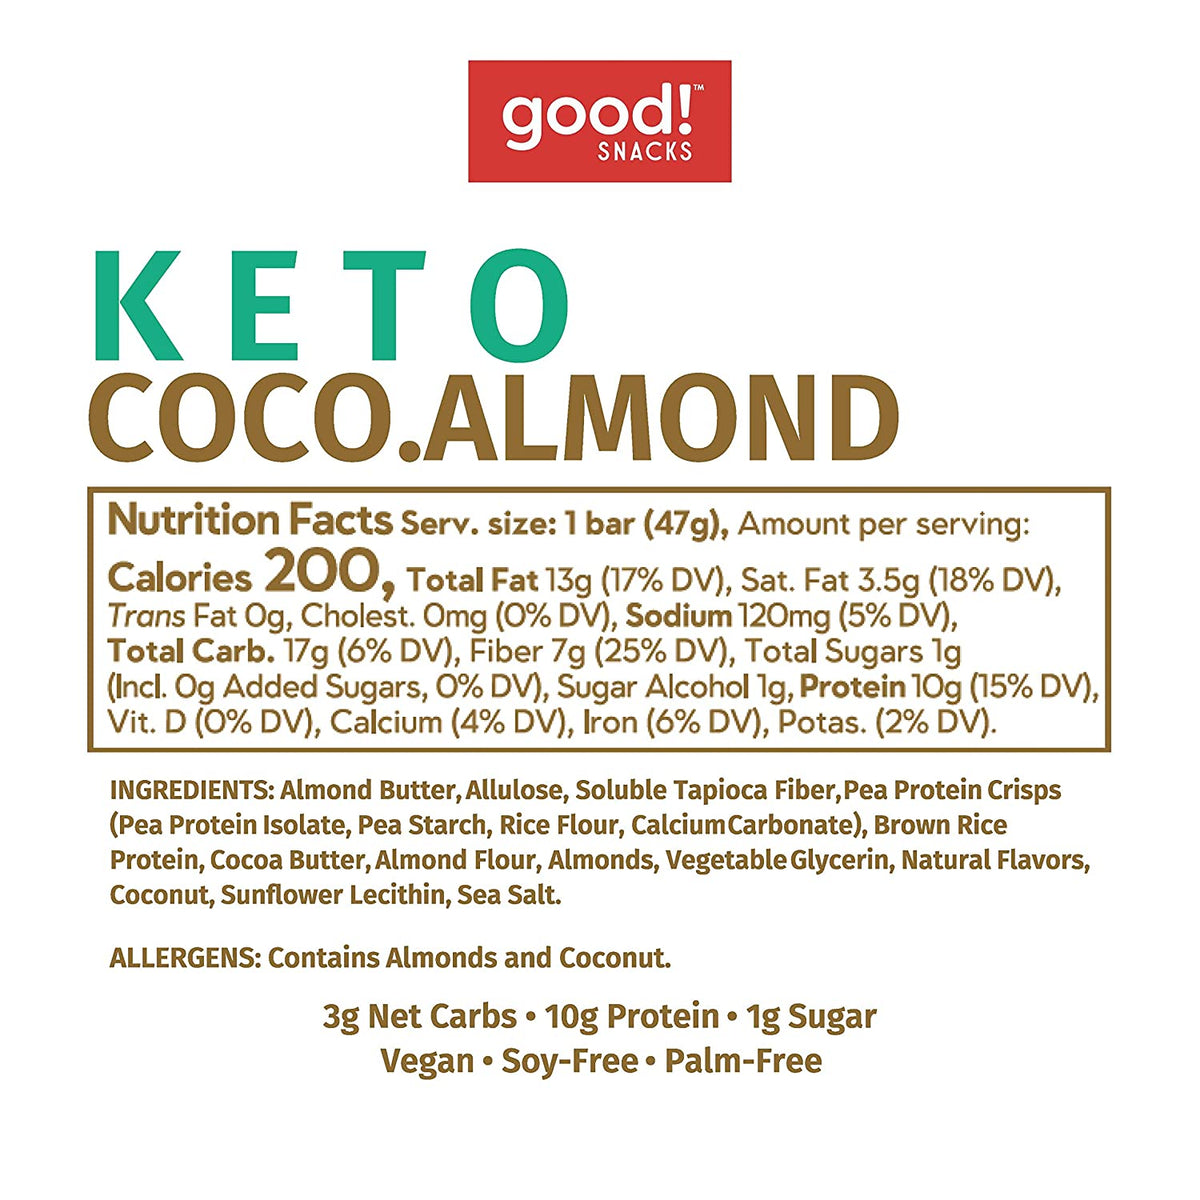 good!®KETO™ Coconut Almond vegan protein bar